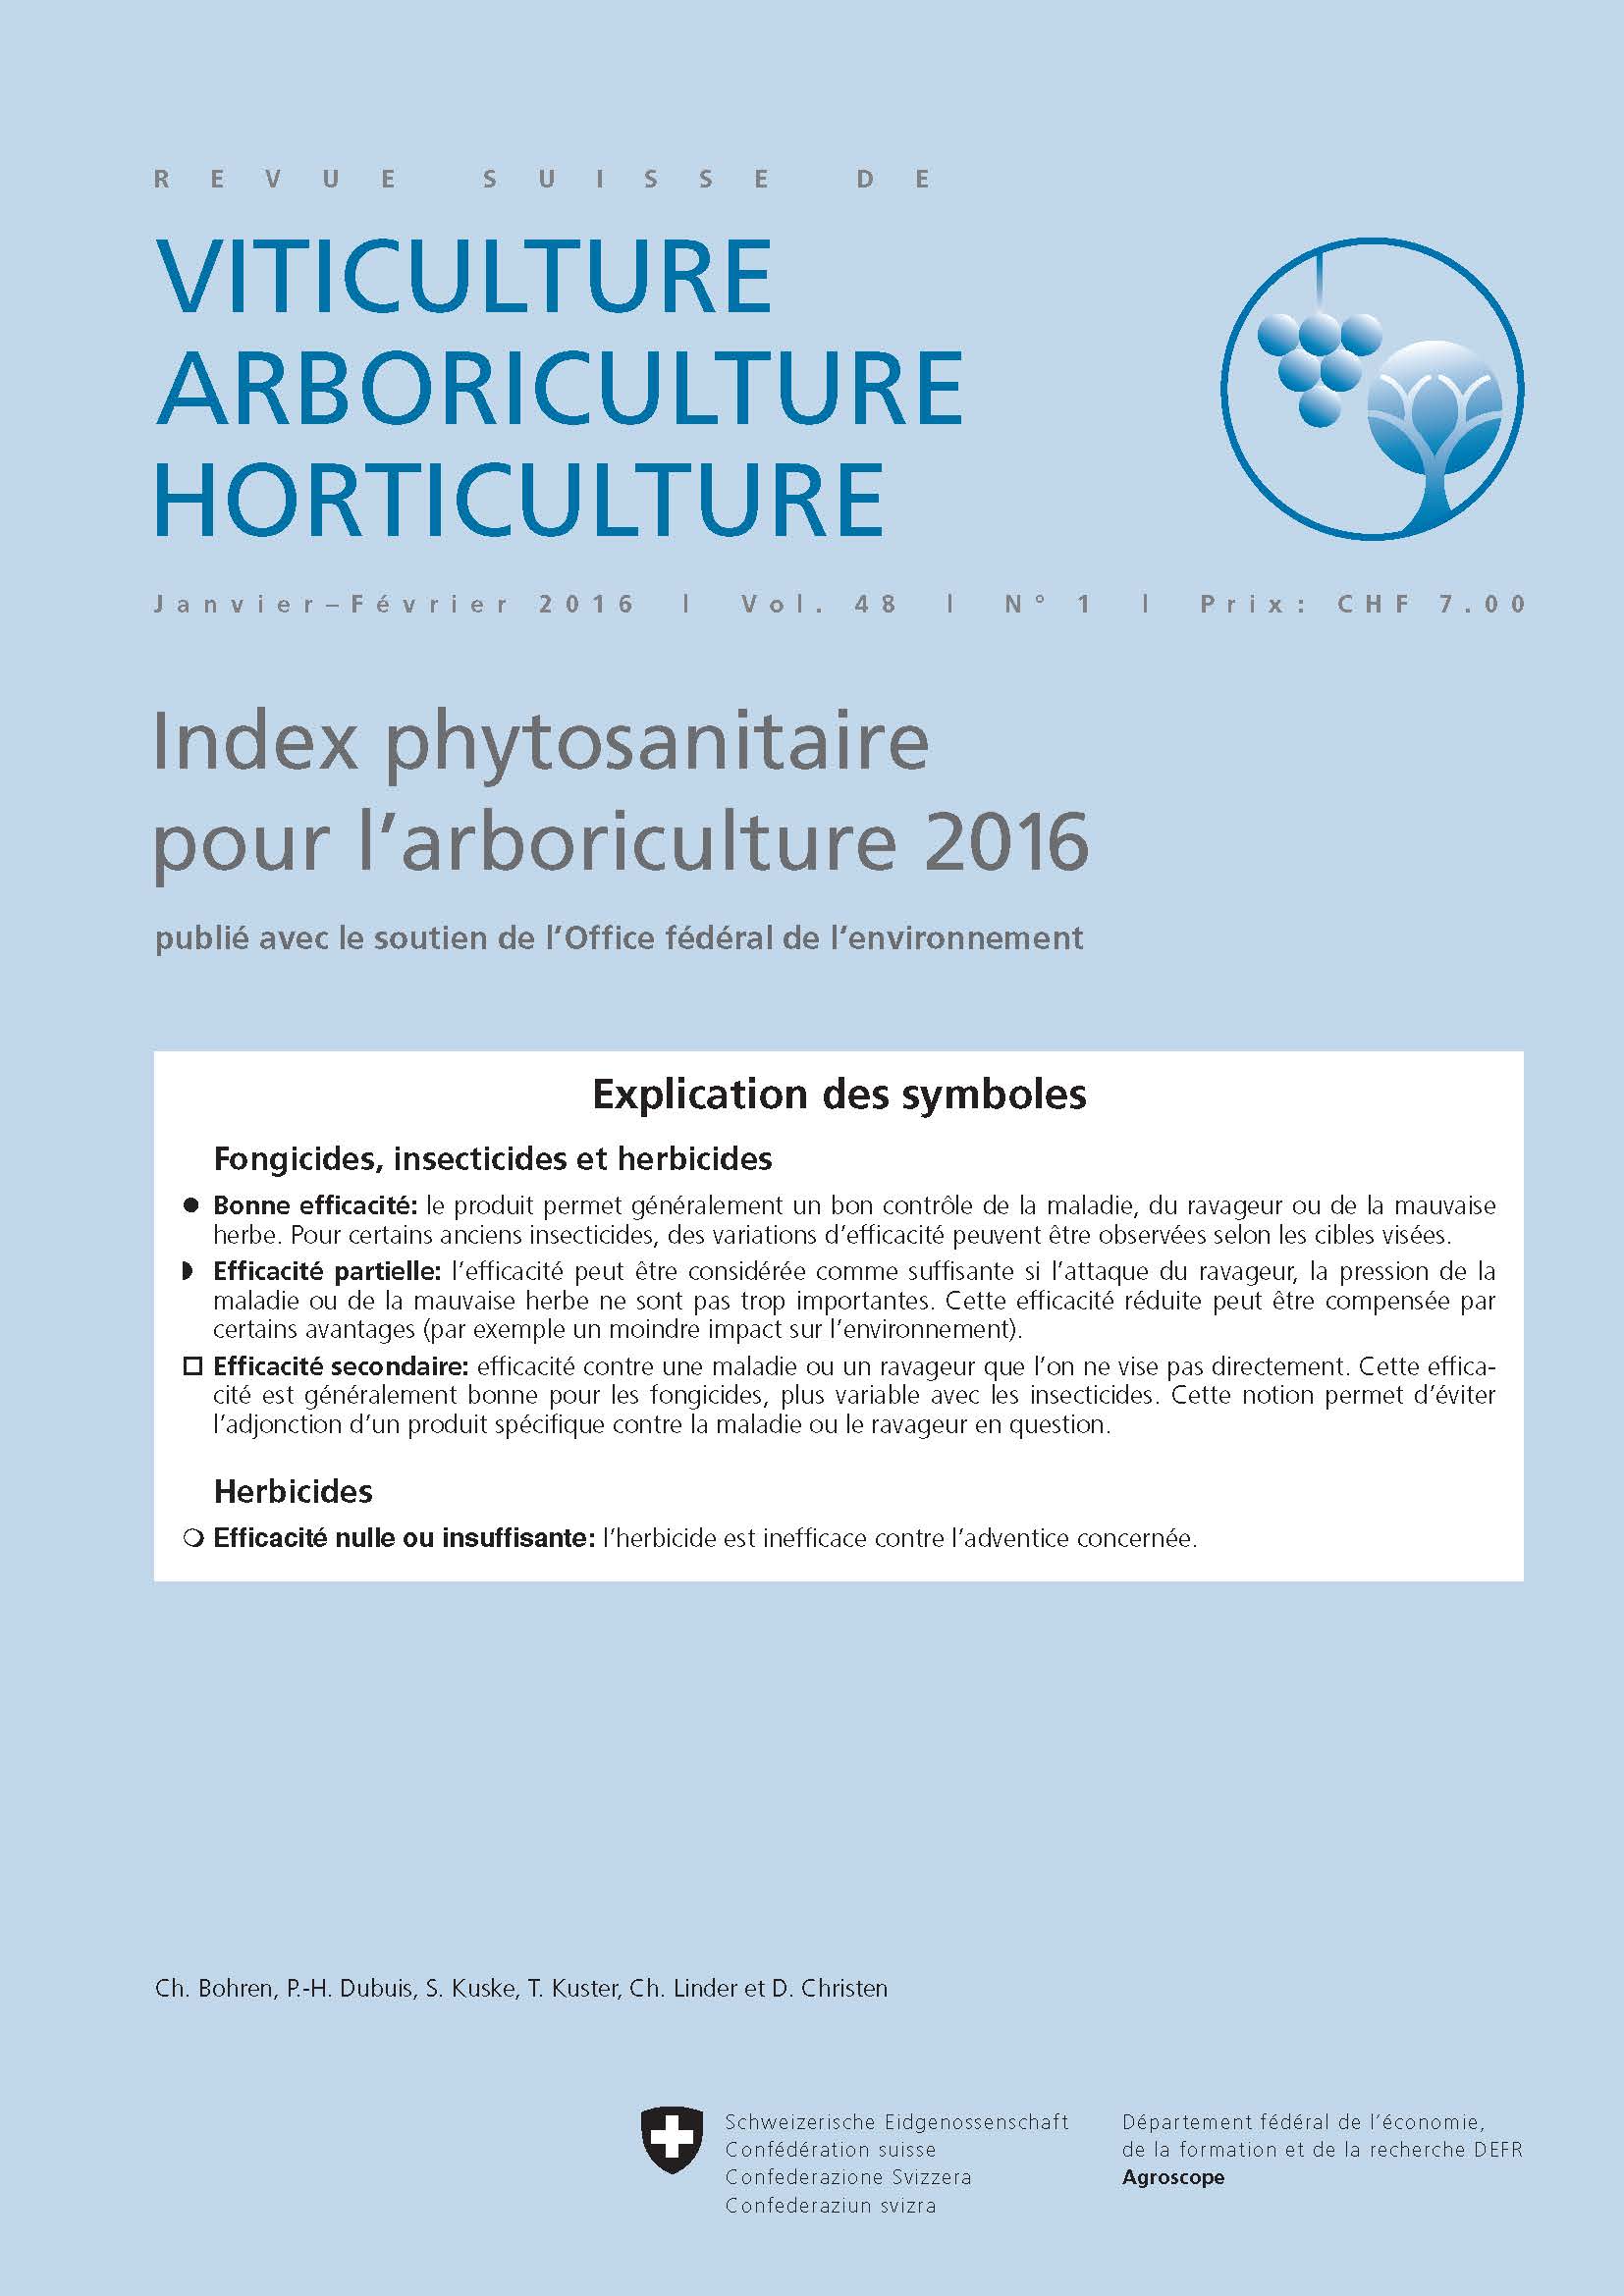 Index phytosanitaire pour l’arboriculture 2016